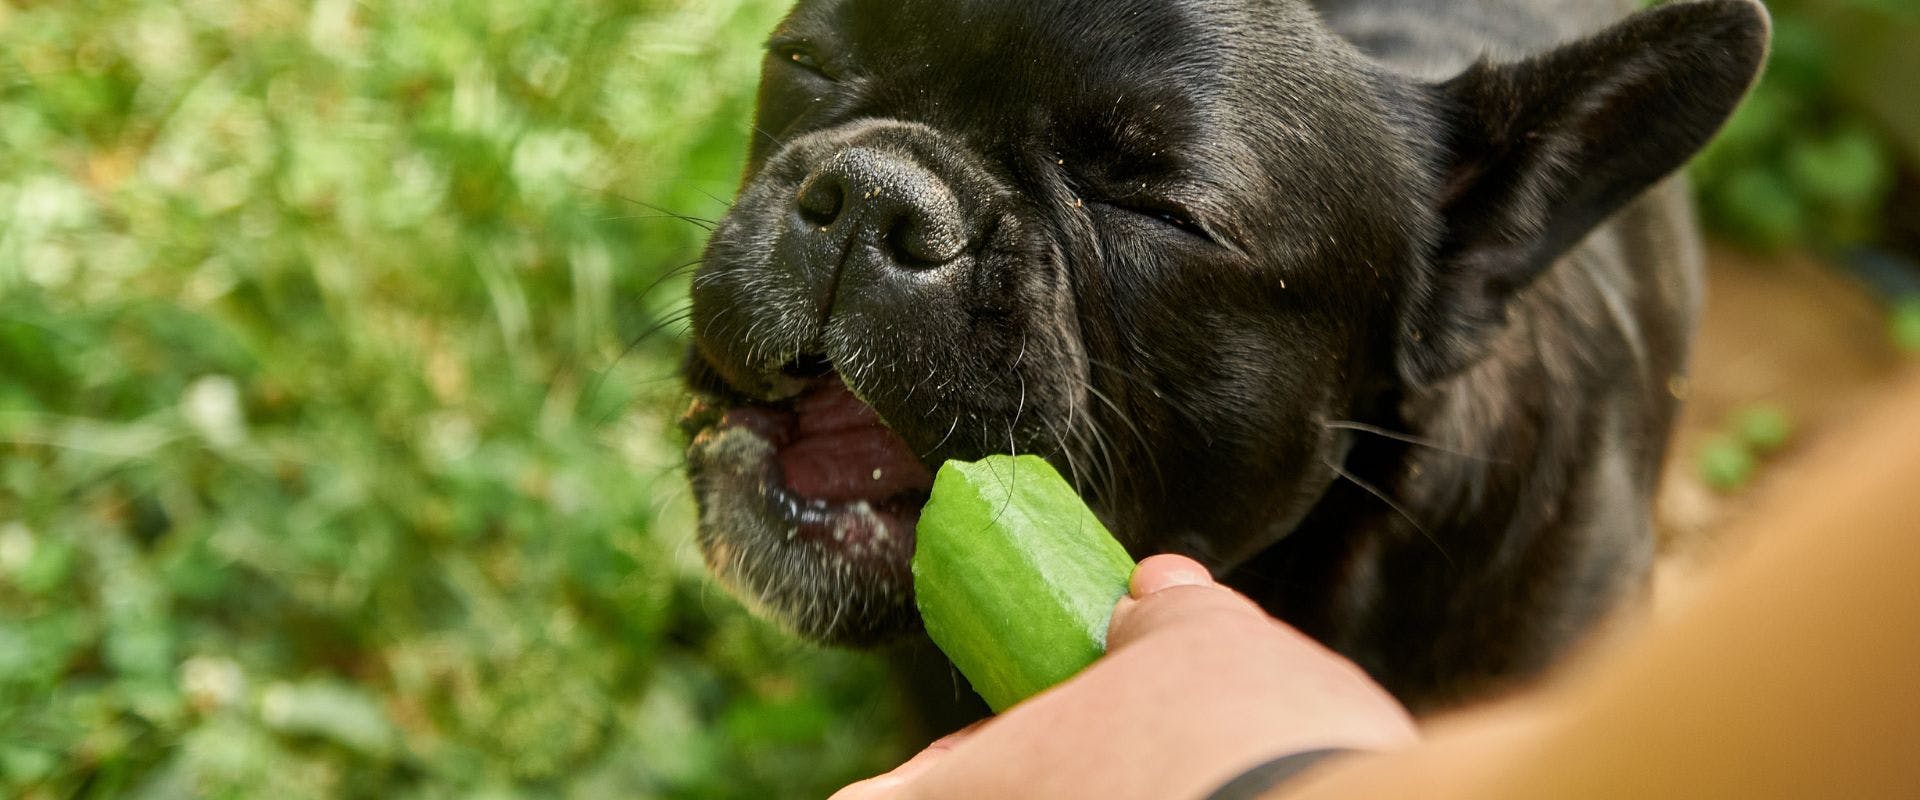 French Bulldog eating cucumber